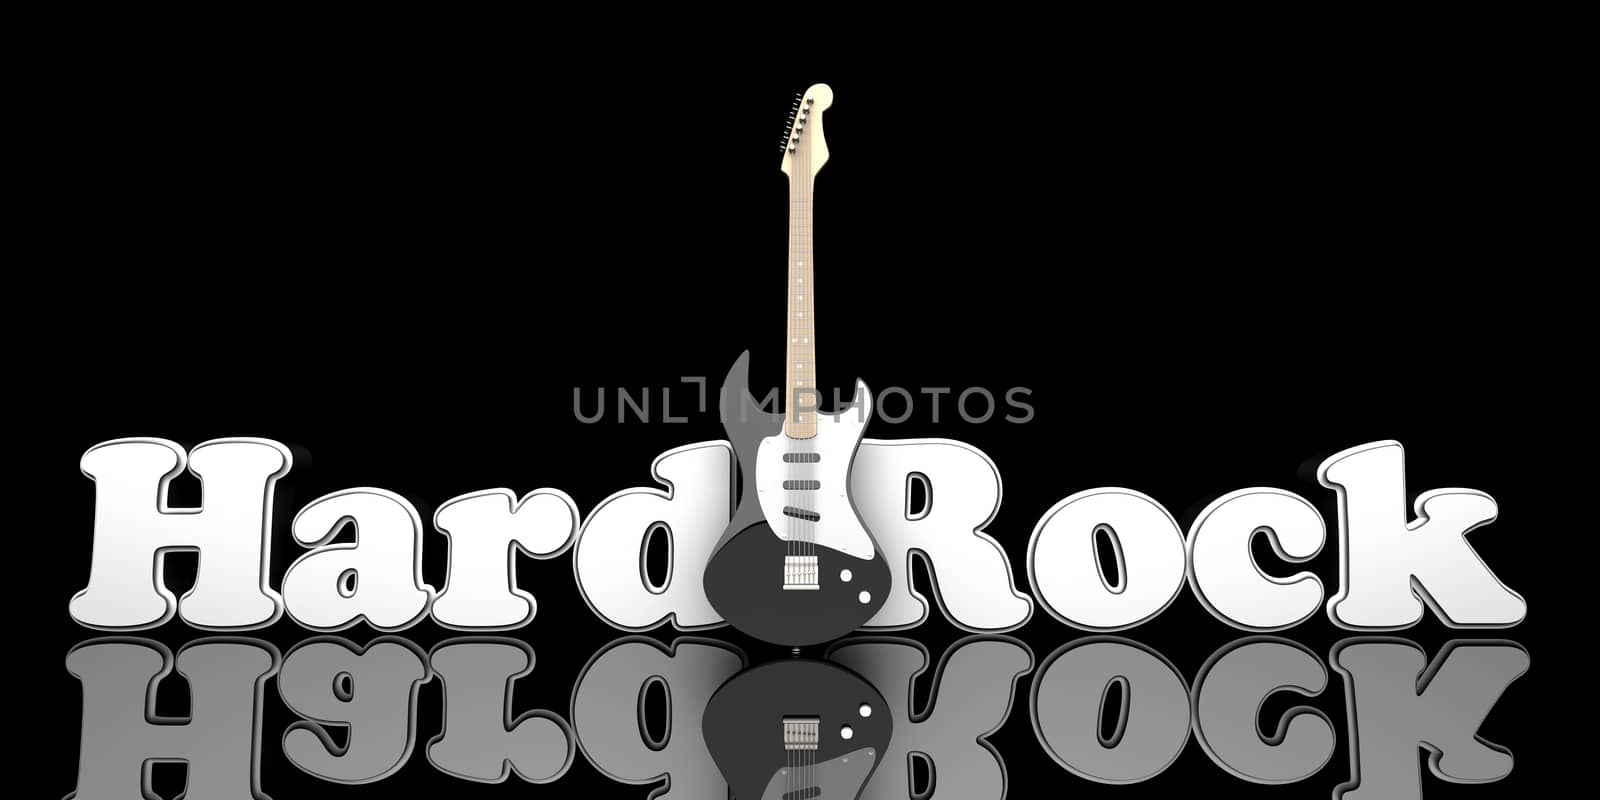 Hardrock by Spectral